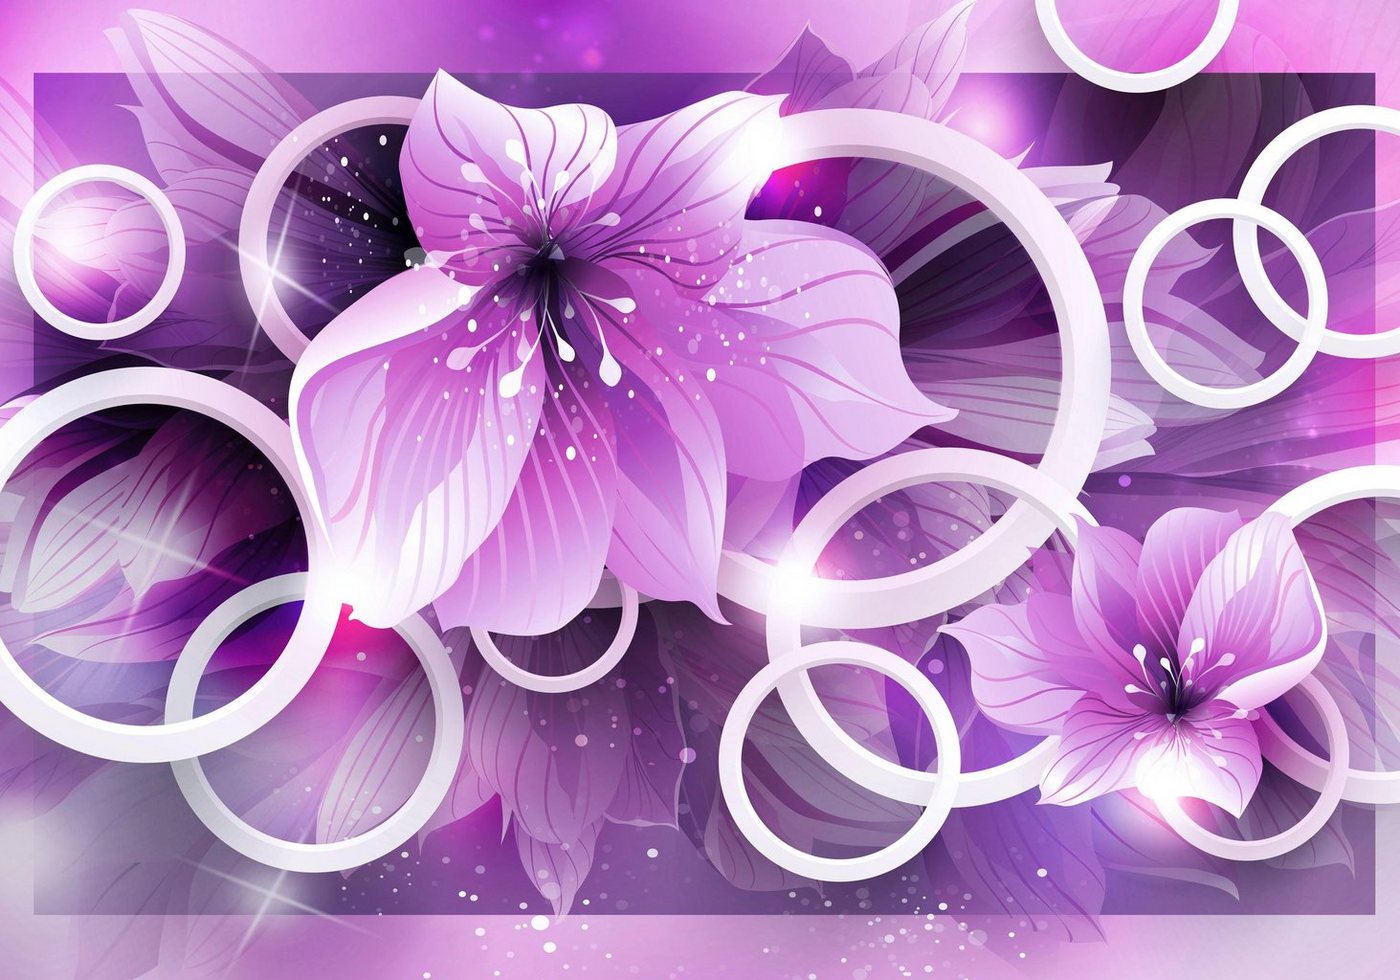 wandmotiv24 Fototapete Violett Blumen 3D Kreise Blättern, glatt, Wandtapete, Motivtapete, matt, Vliestapete, selbstklebend von wandmotiv24